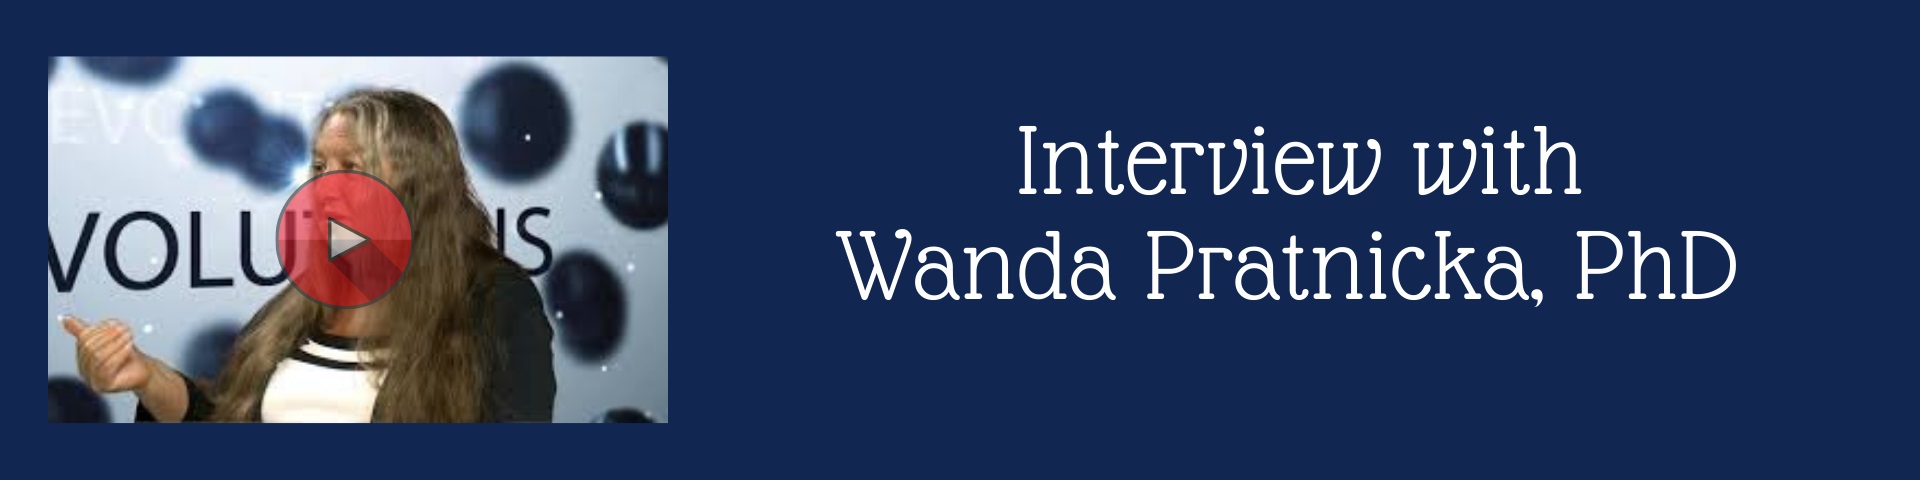 Interview with Wanda Pratnicka PhD